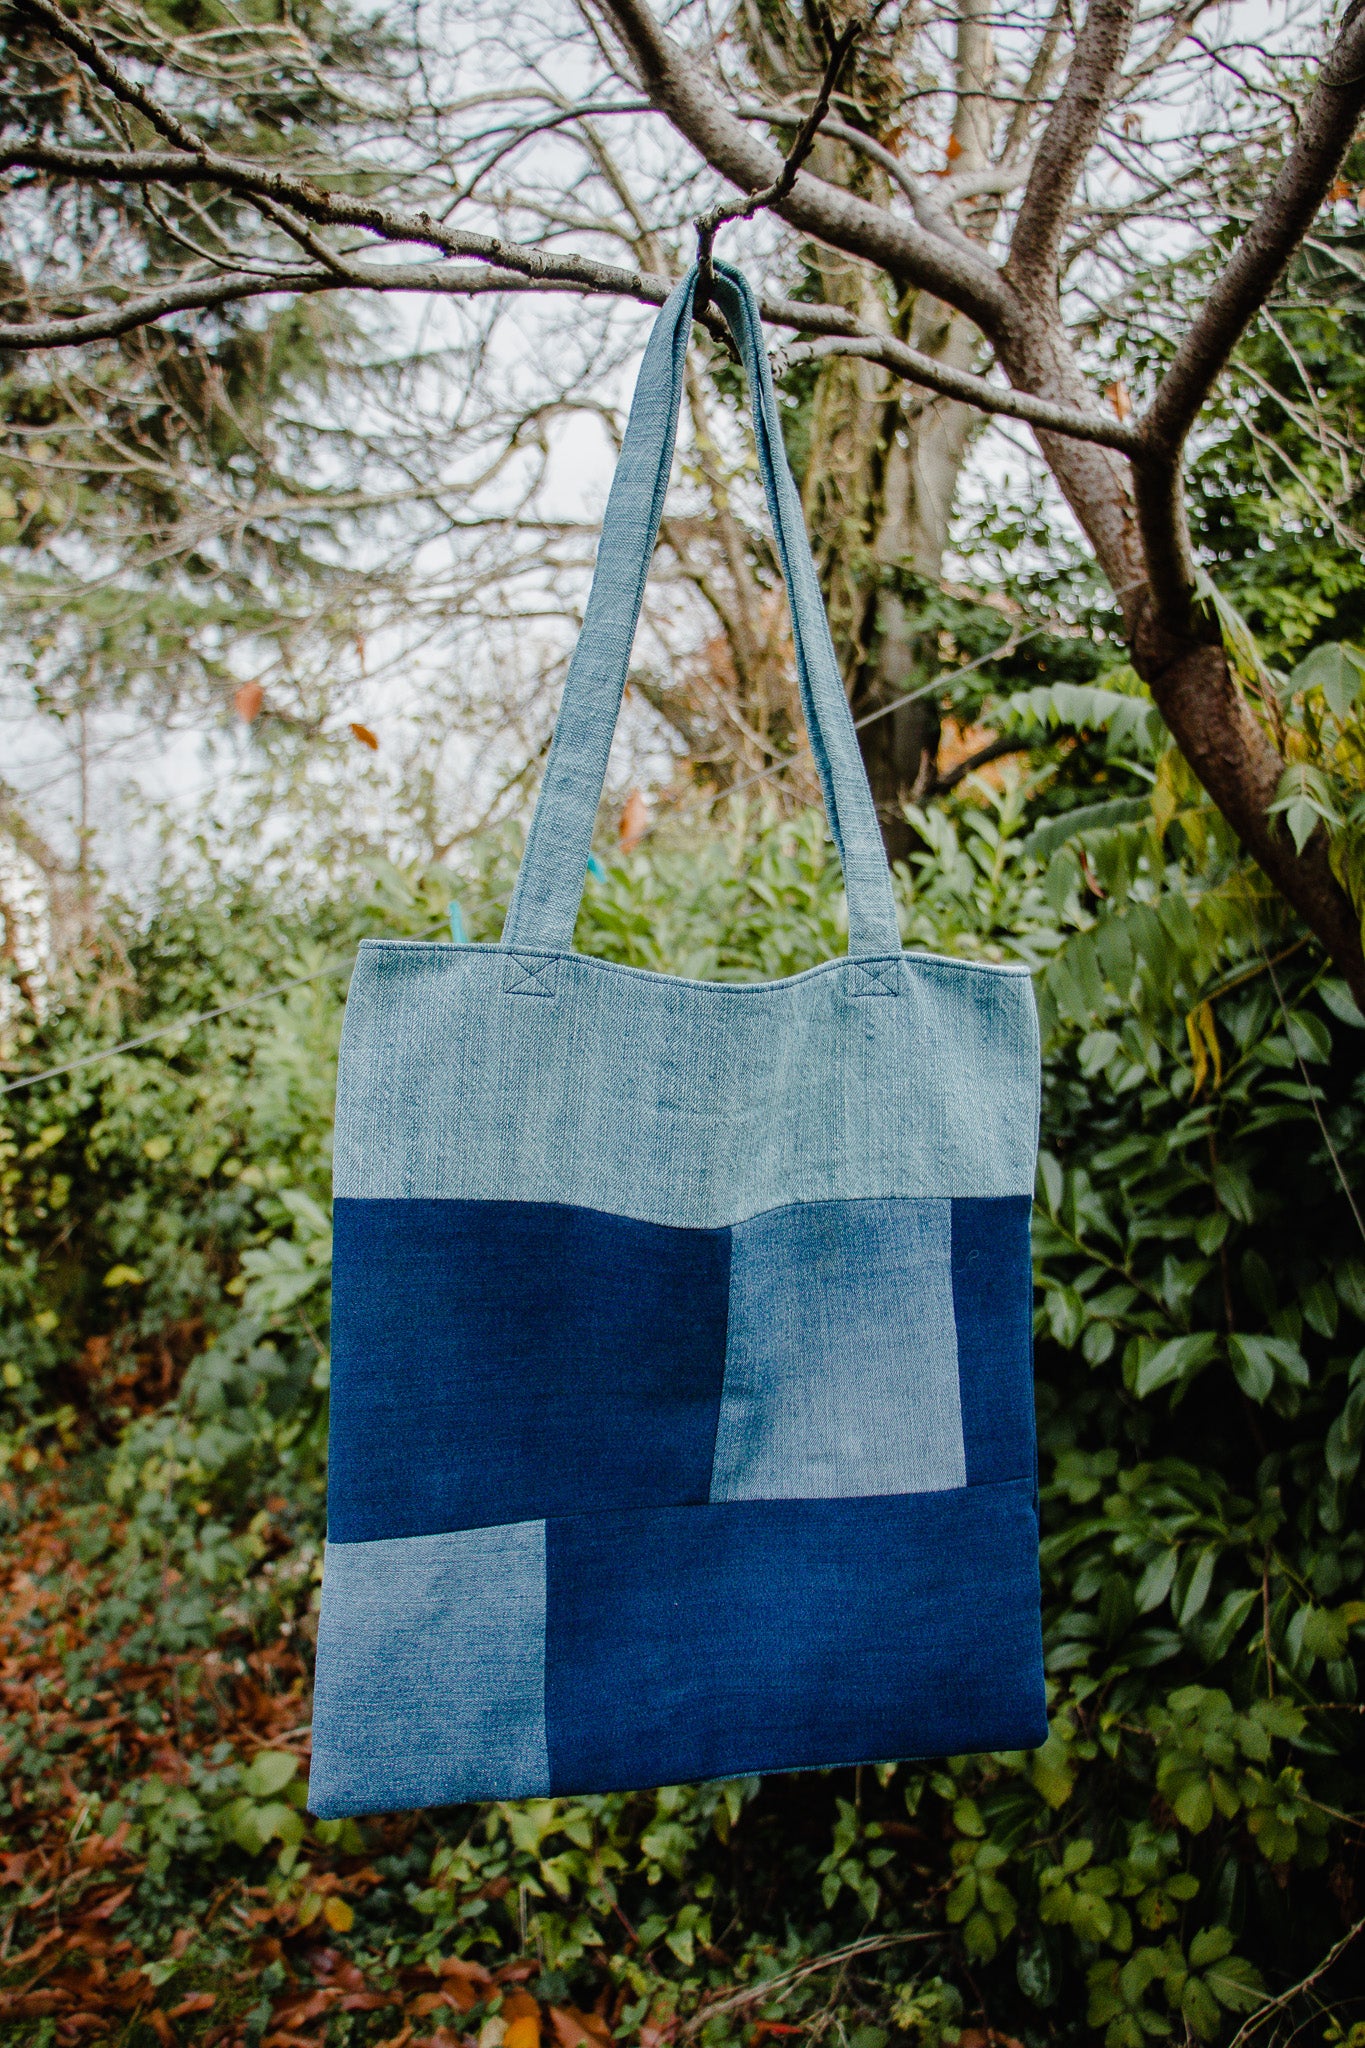 Amazon.com: Wave Heart Denim Tote Bag - Ocean Heart Shopping Bag - Graphic  Design Tote Bag - Dark Washed : Home & Kitchen